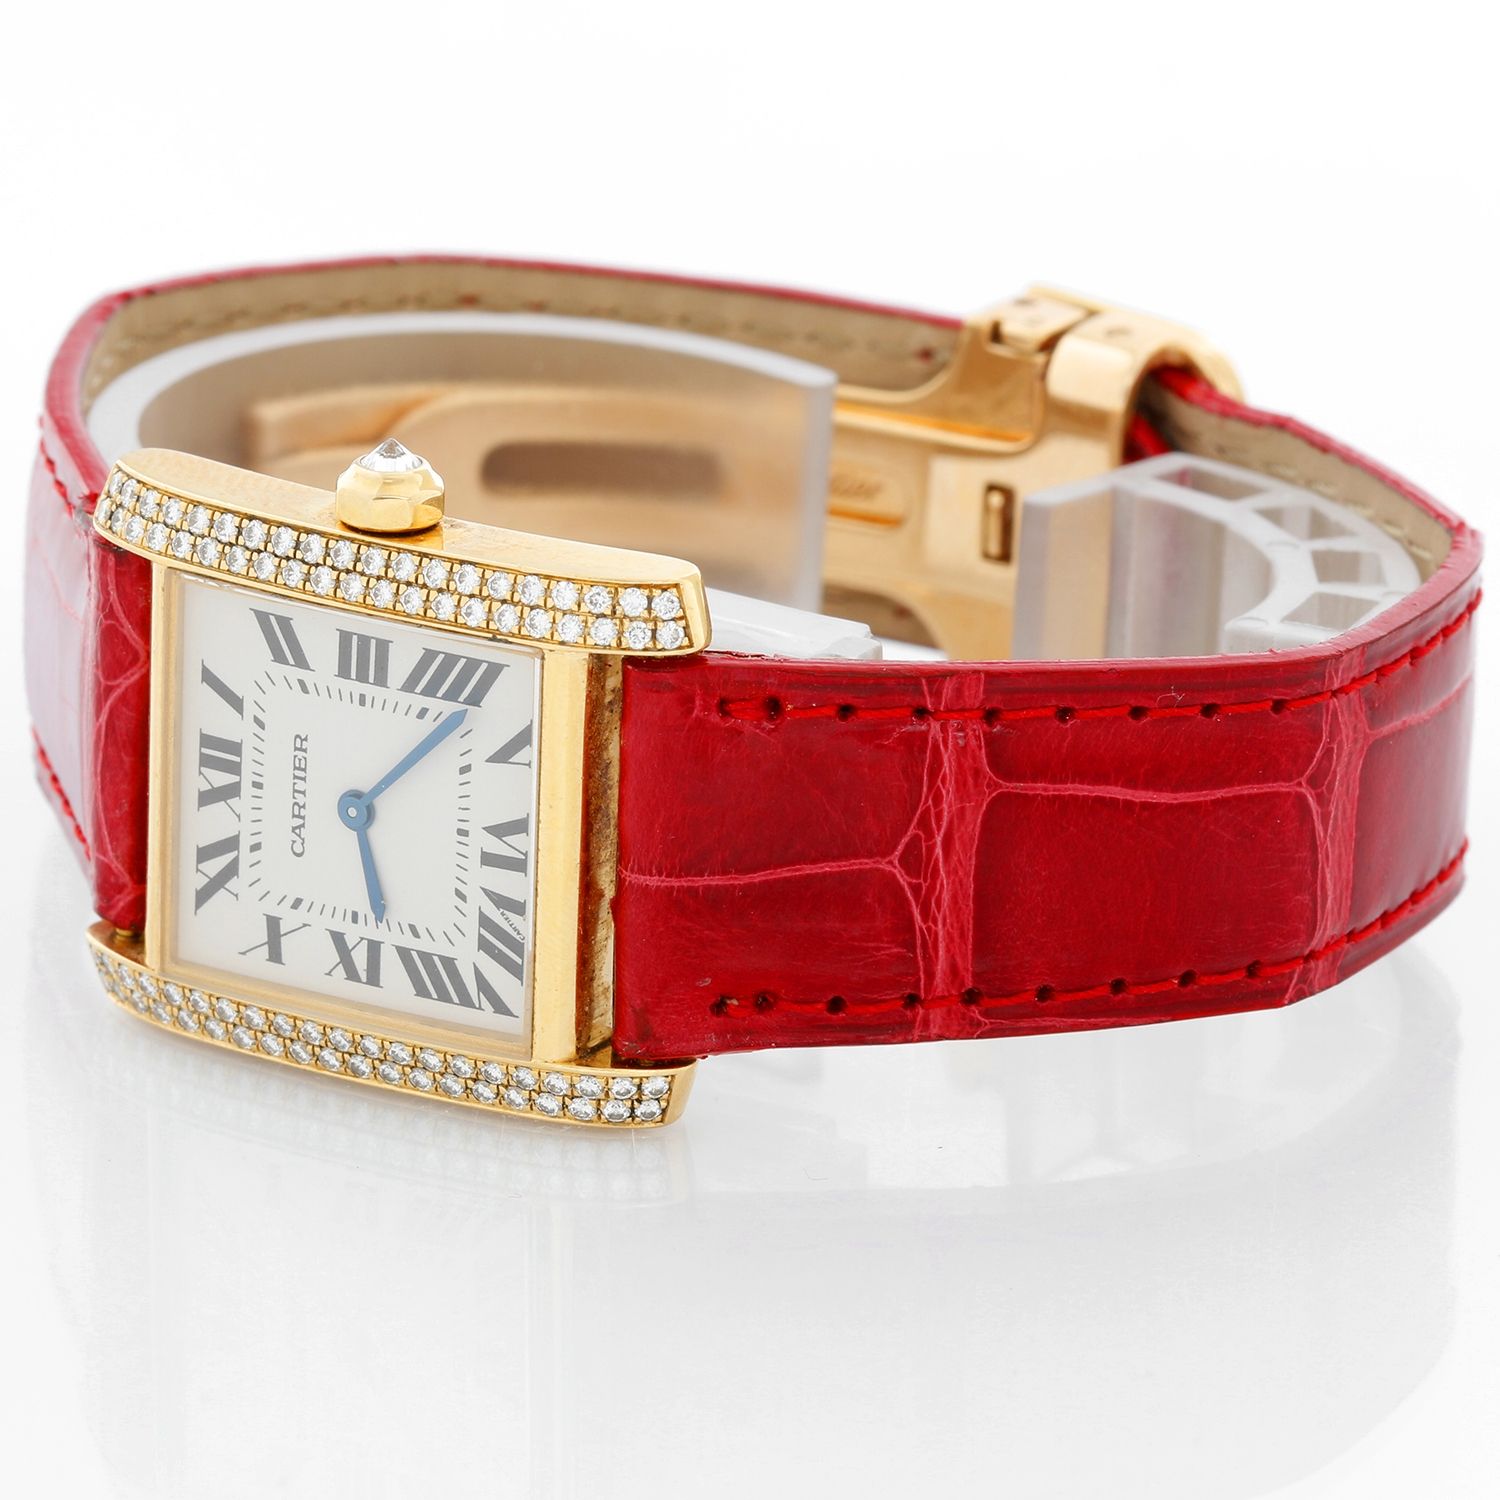 Cartier - Tank française Watch - Jewellery Watches - Size: mm